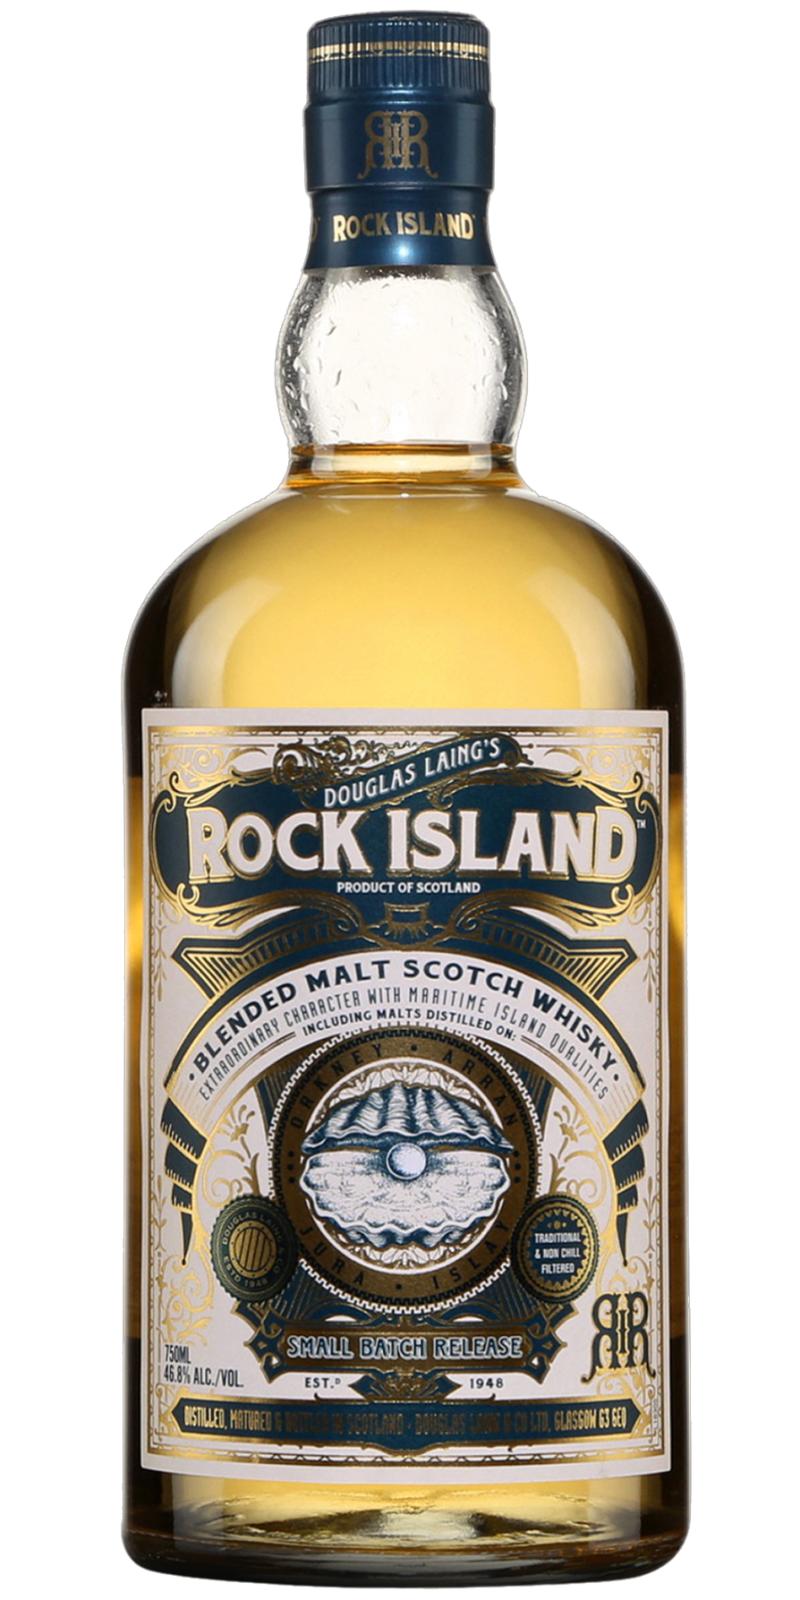 Rock Island Small Batch Release DL 46.8% 750ml